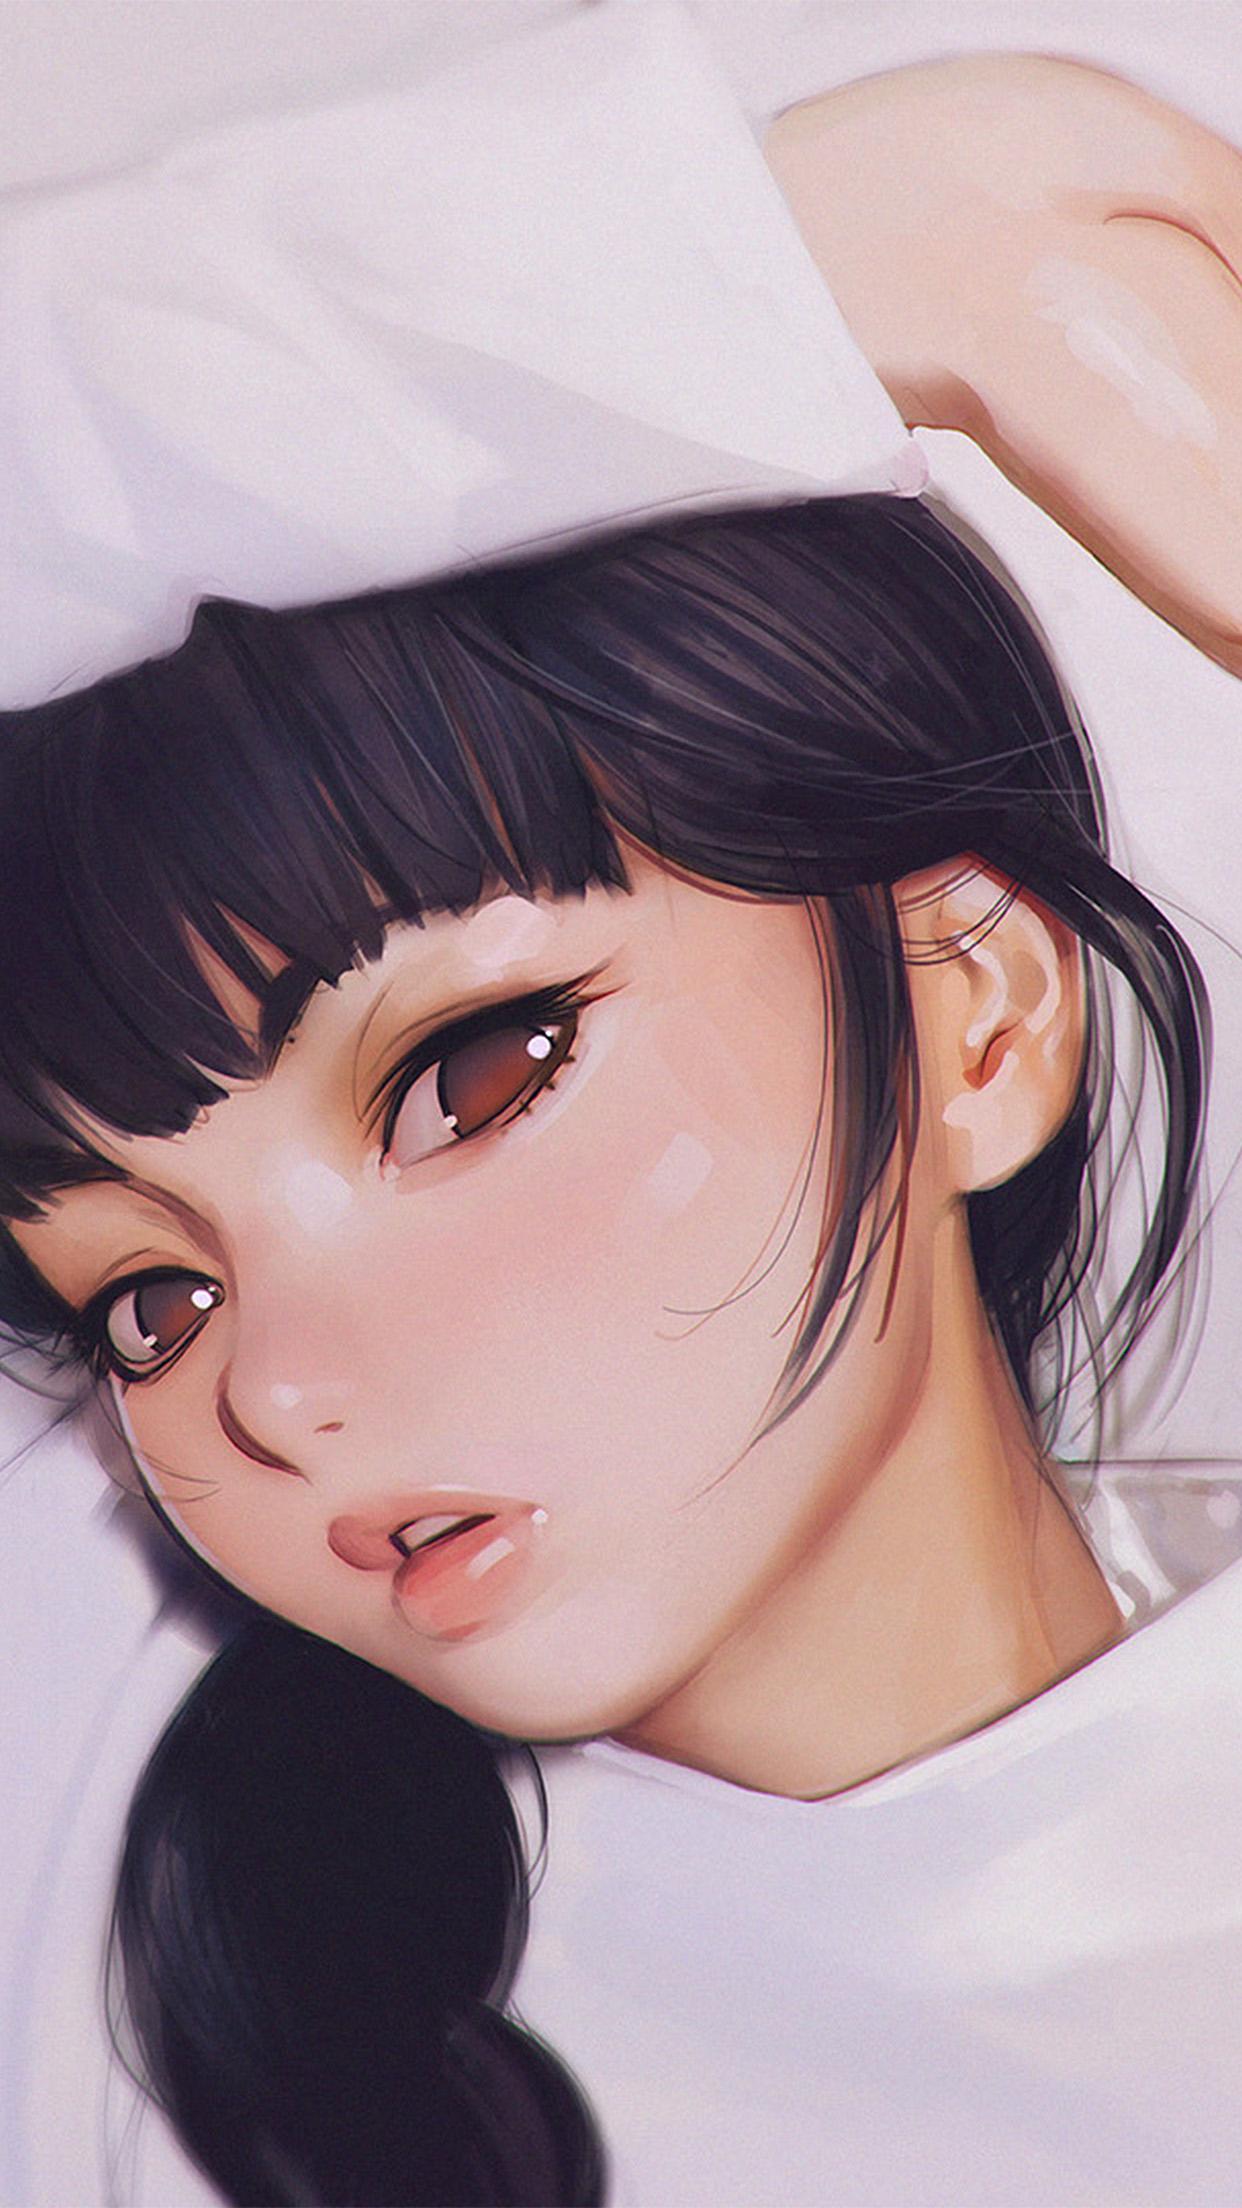 Realistic Anime Girl Wallpapers - Top Free Realistic Anime Girl